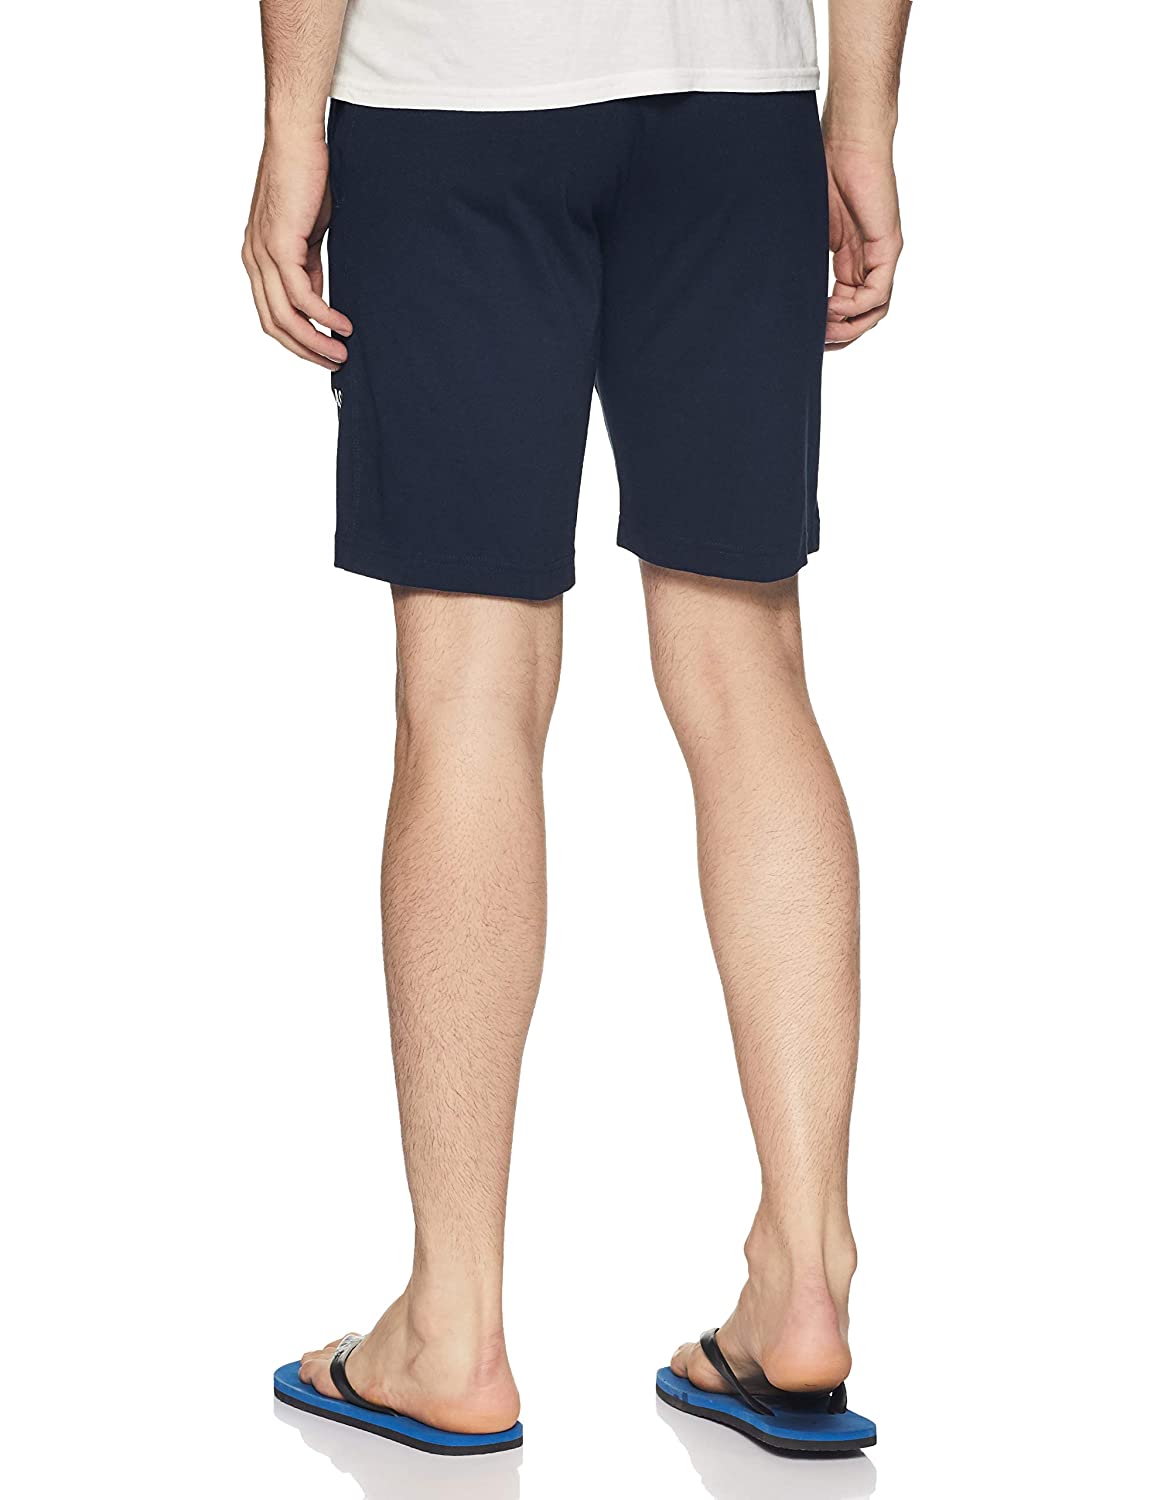 Cotton Cargo Shorts Men's Summer Loose Five-point Pants Casual Sports Big  Shorts | eBay